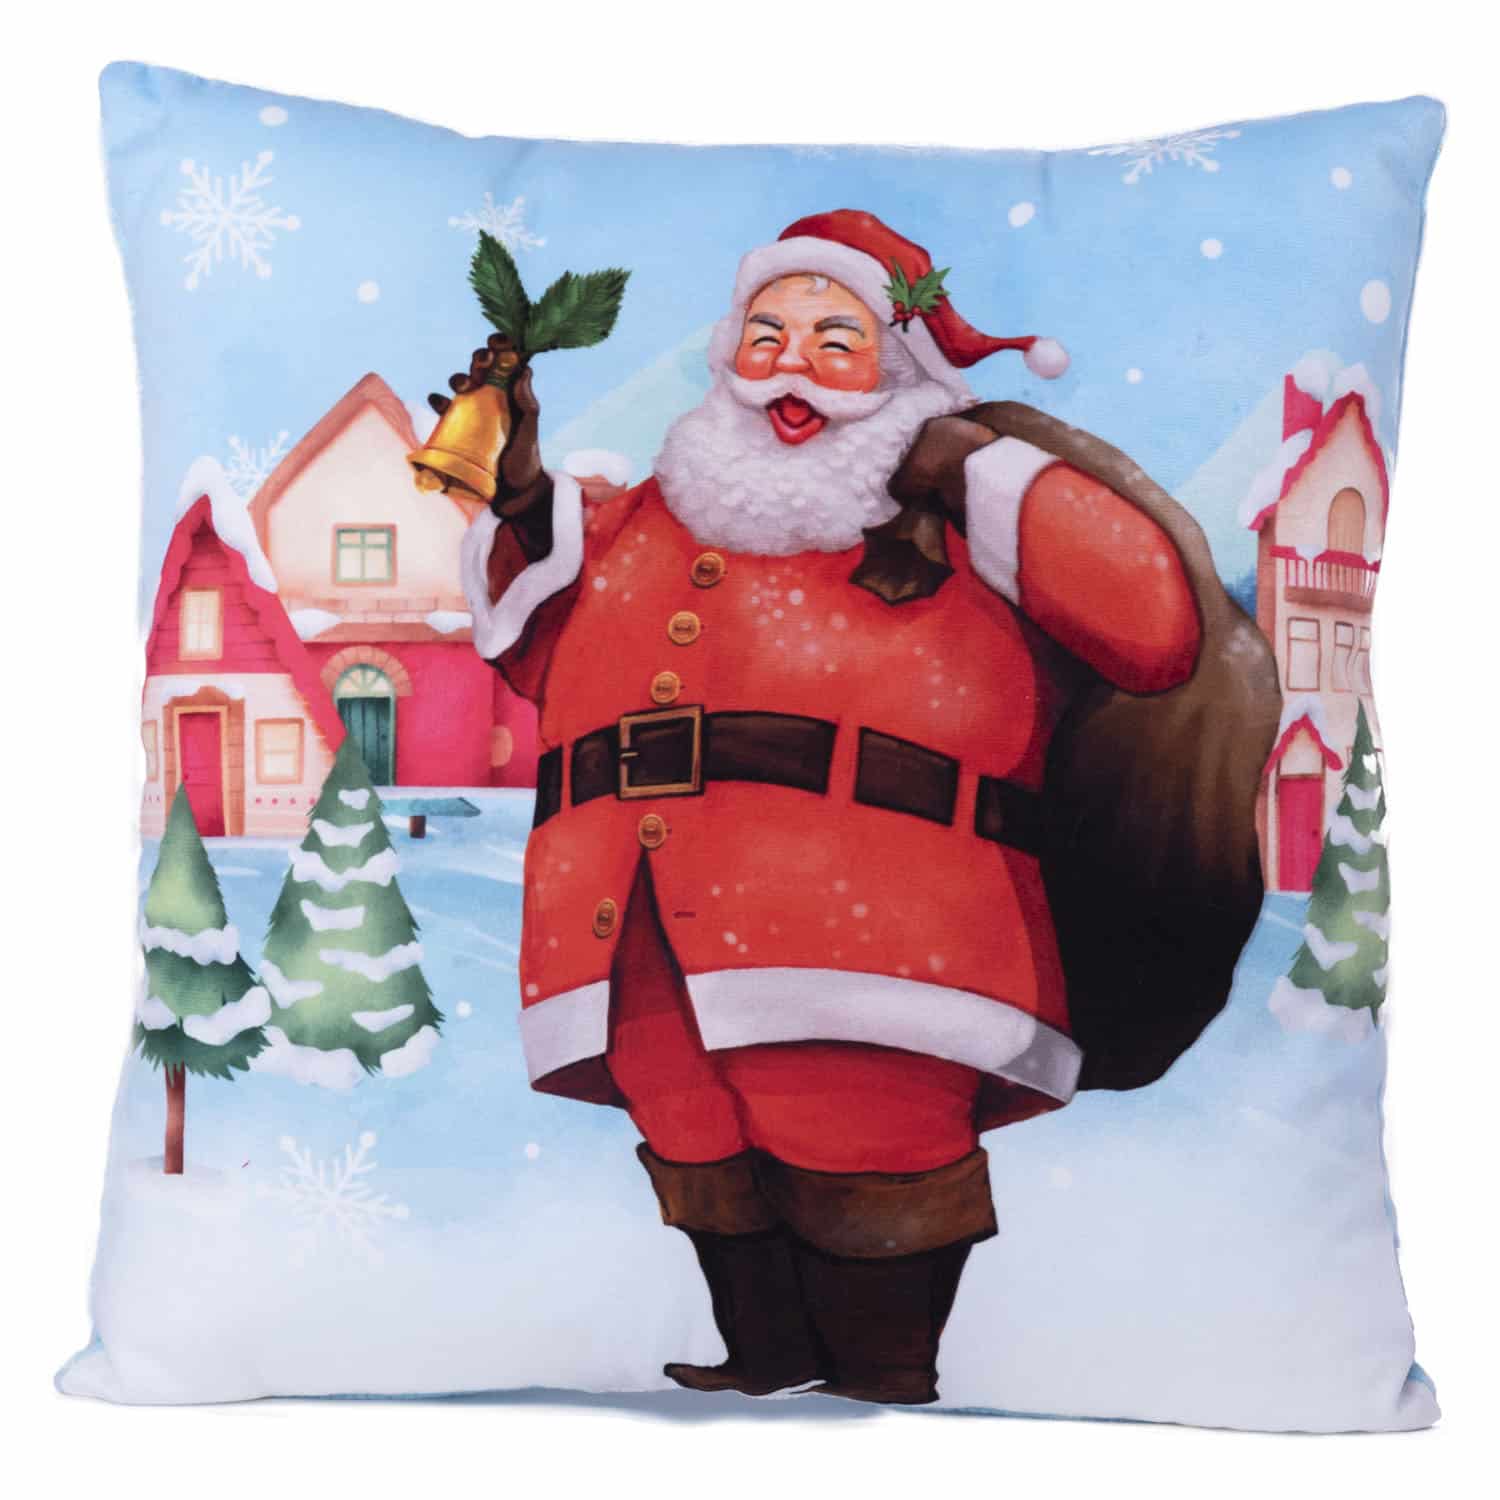 Santa pillow with a sack